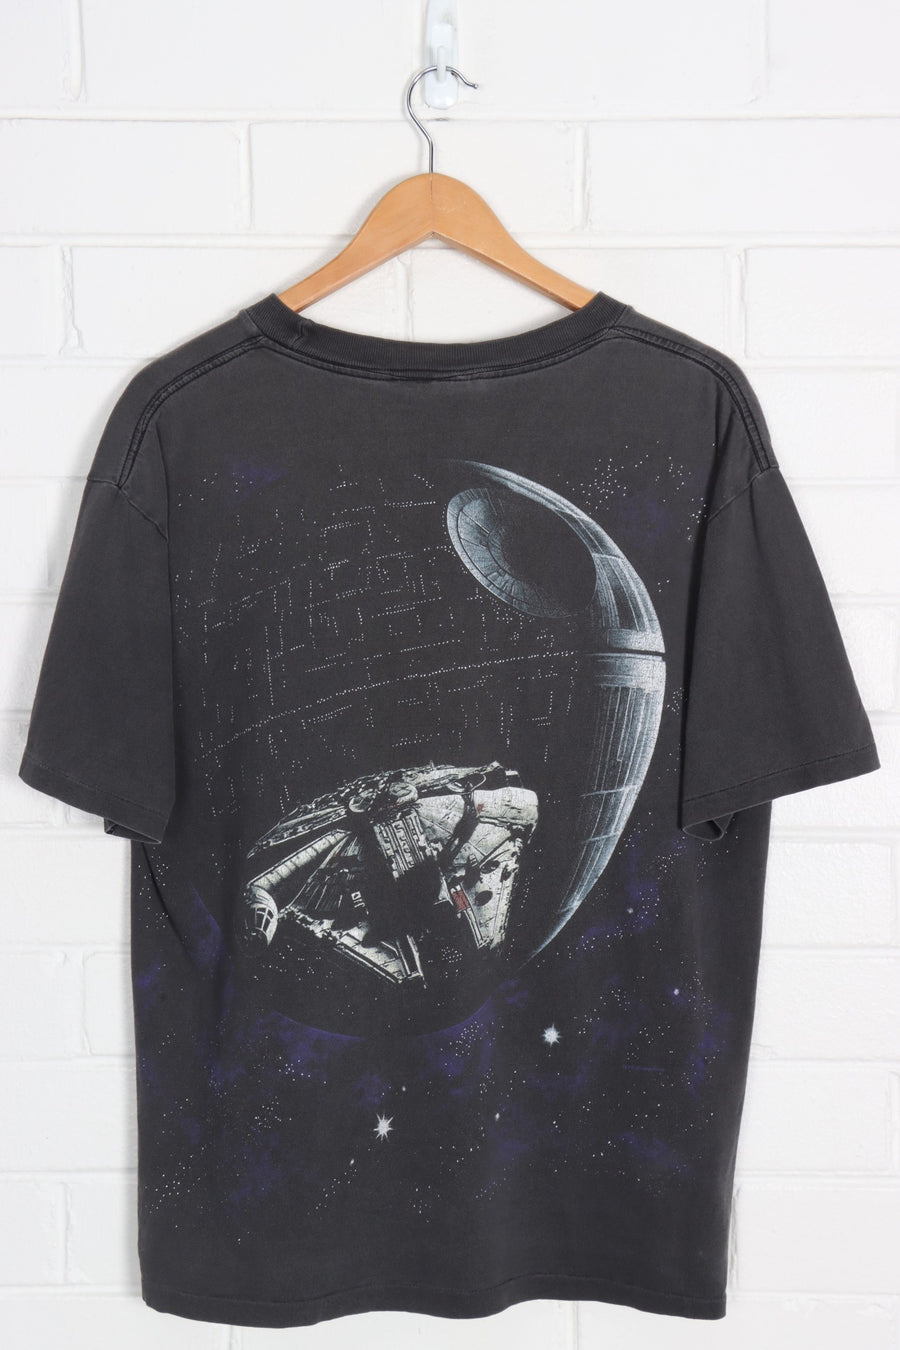 Vintage STAR WARS Millennium Falcon Tie Fighter Death Star All Over T-Shirt (L)